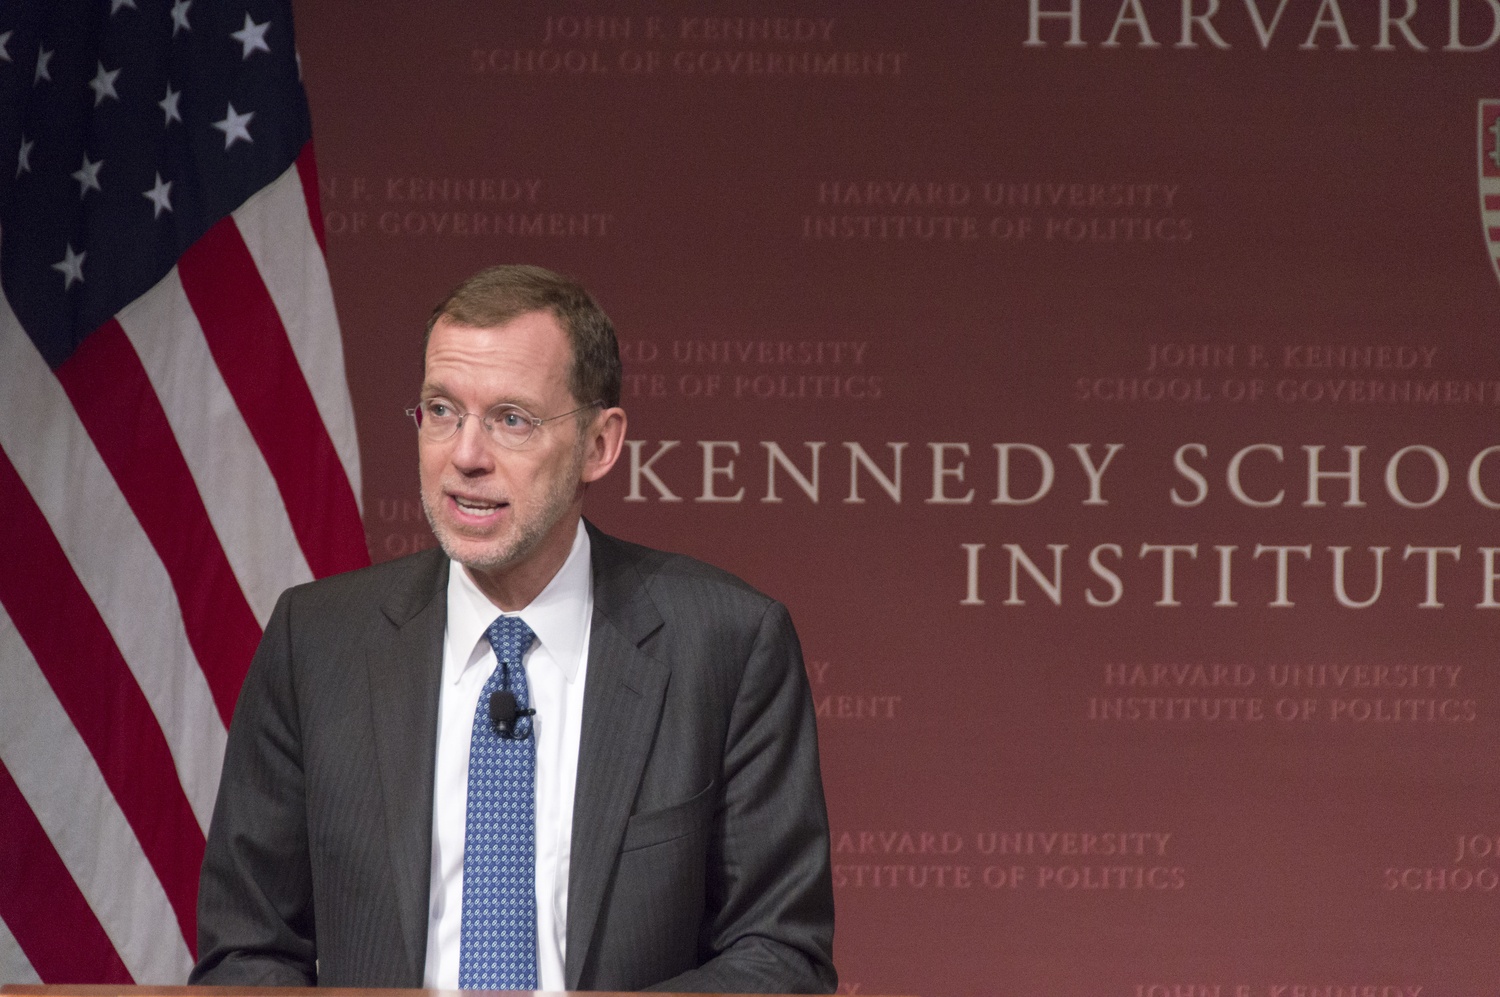 Douglas W. Elmendorf has served as dean of the Harvard Kennedy School since 2016.